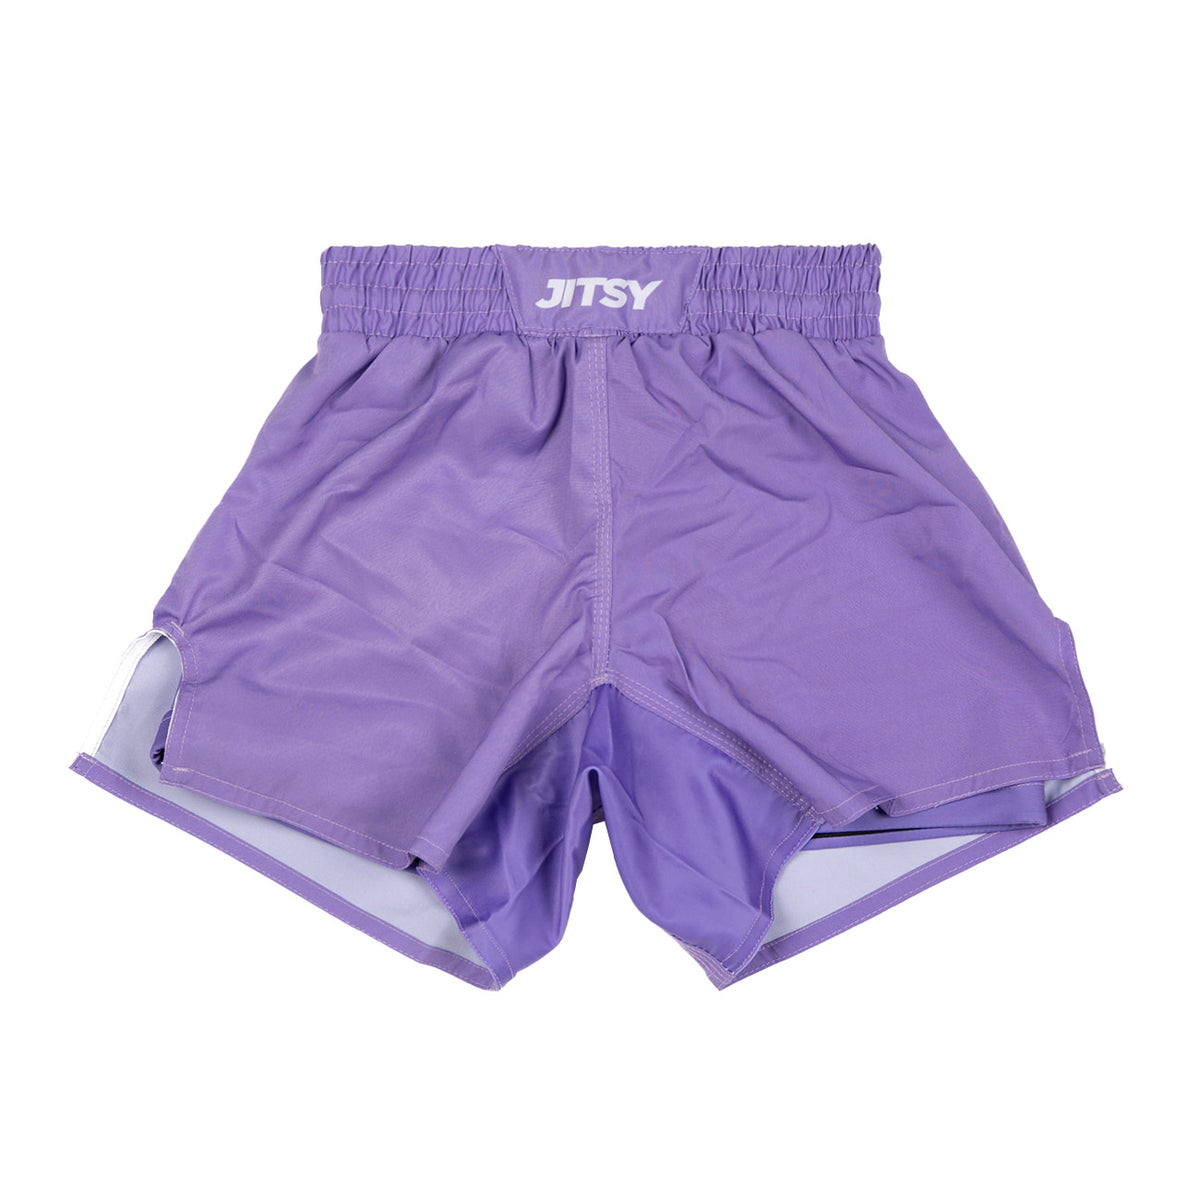 Women's spats shorts - Fighter Girls®